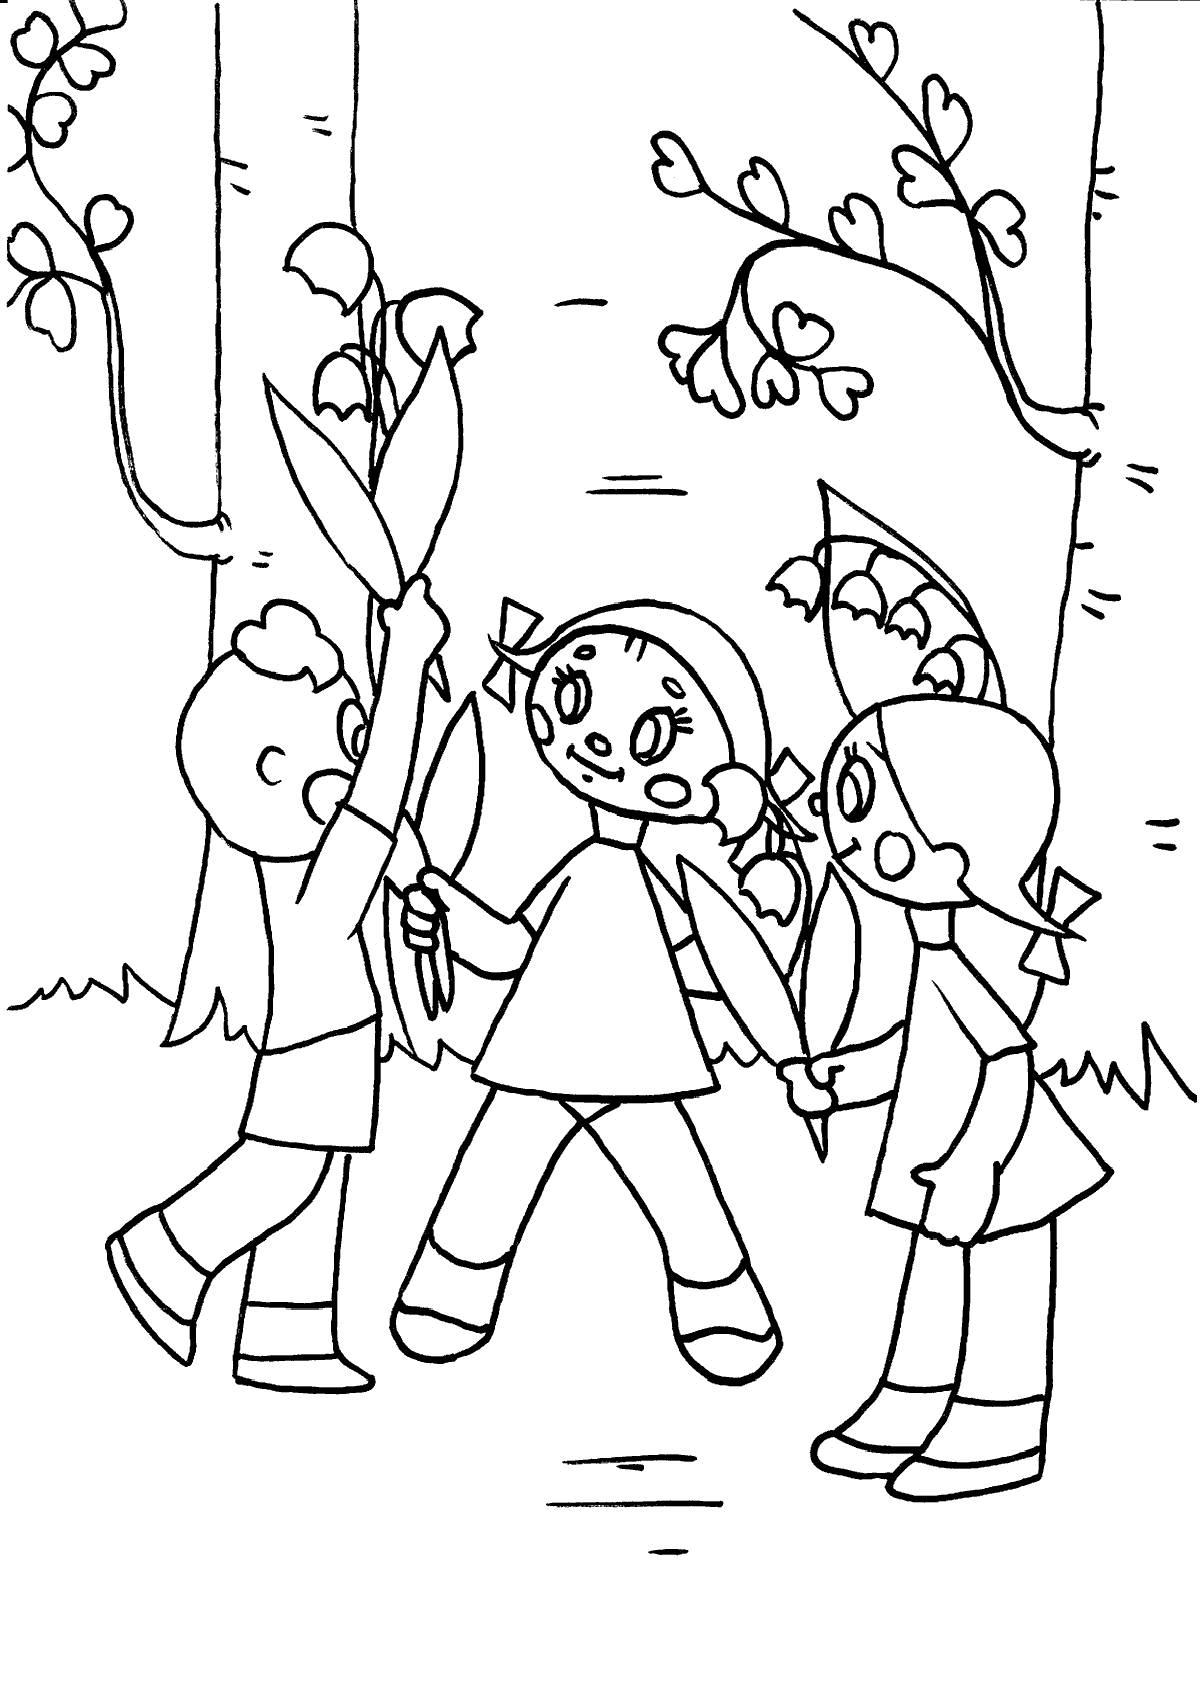 Children in the forest